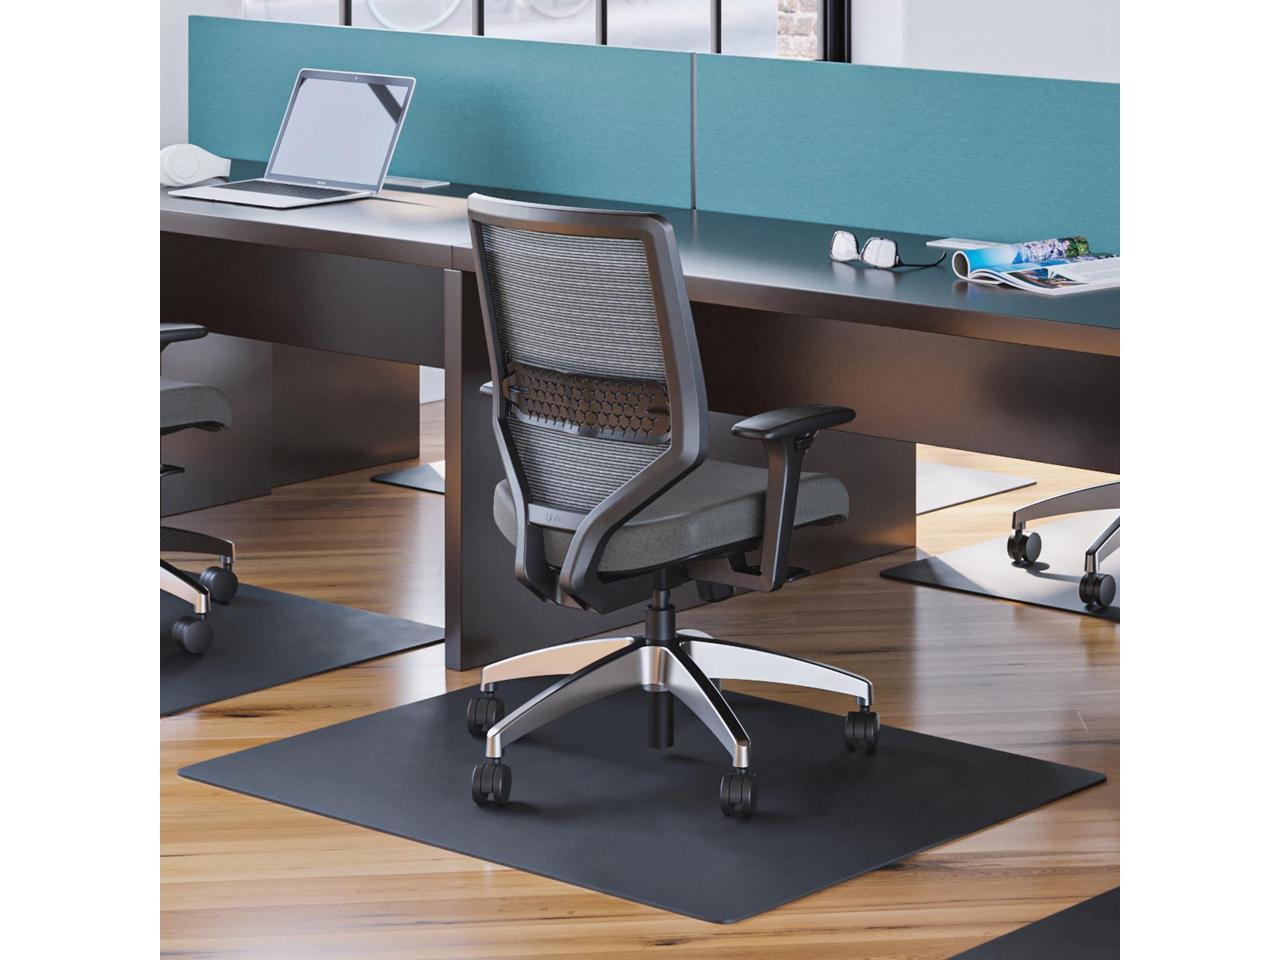 Deflecto EconoMat 46 x 60 Chair Mat for Hard Floor, Rectangular, Black - image 3 of 11